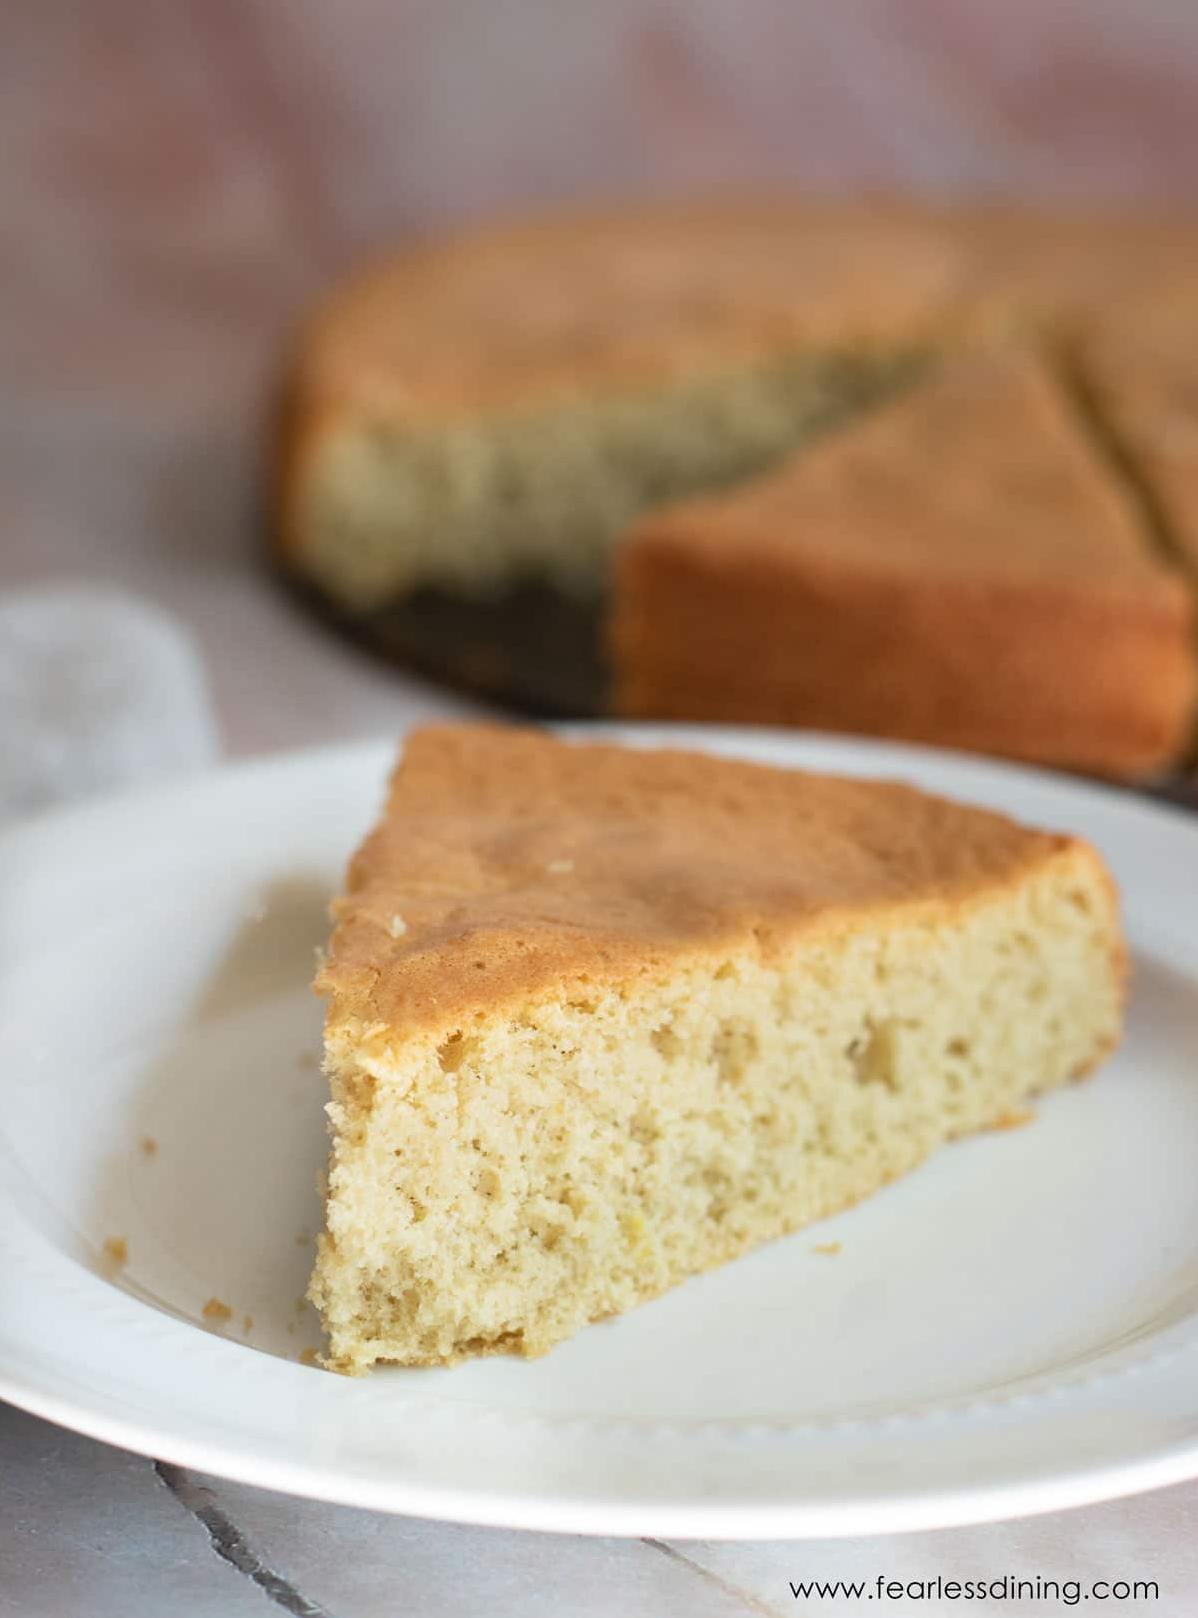  Heart-healthy gluten-free sponge cake recipe coming your way